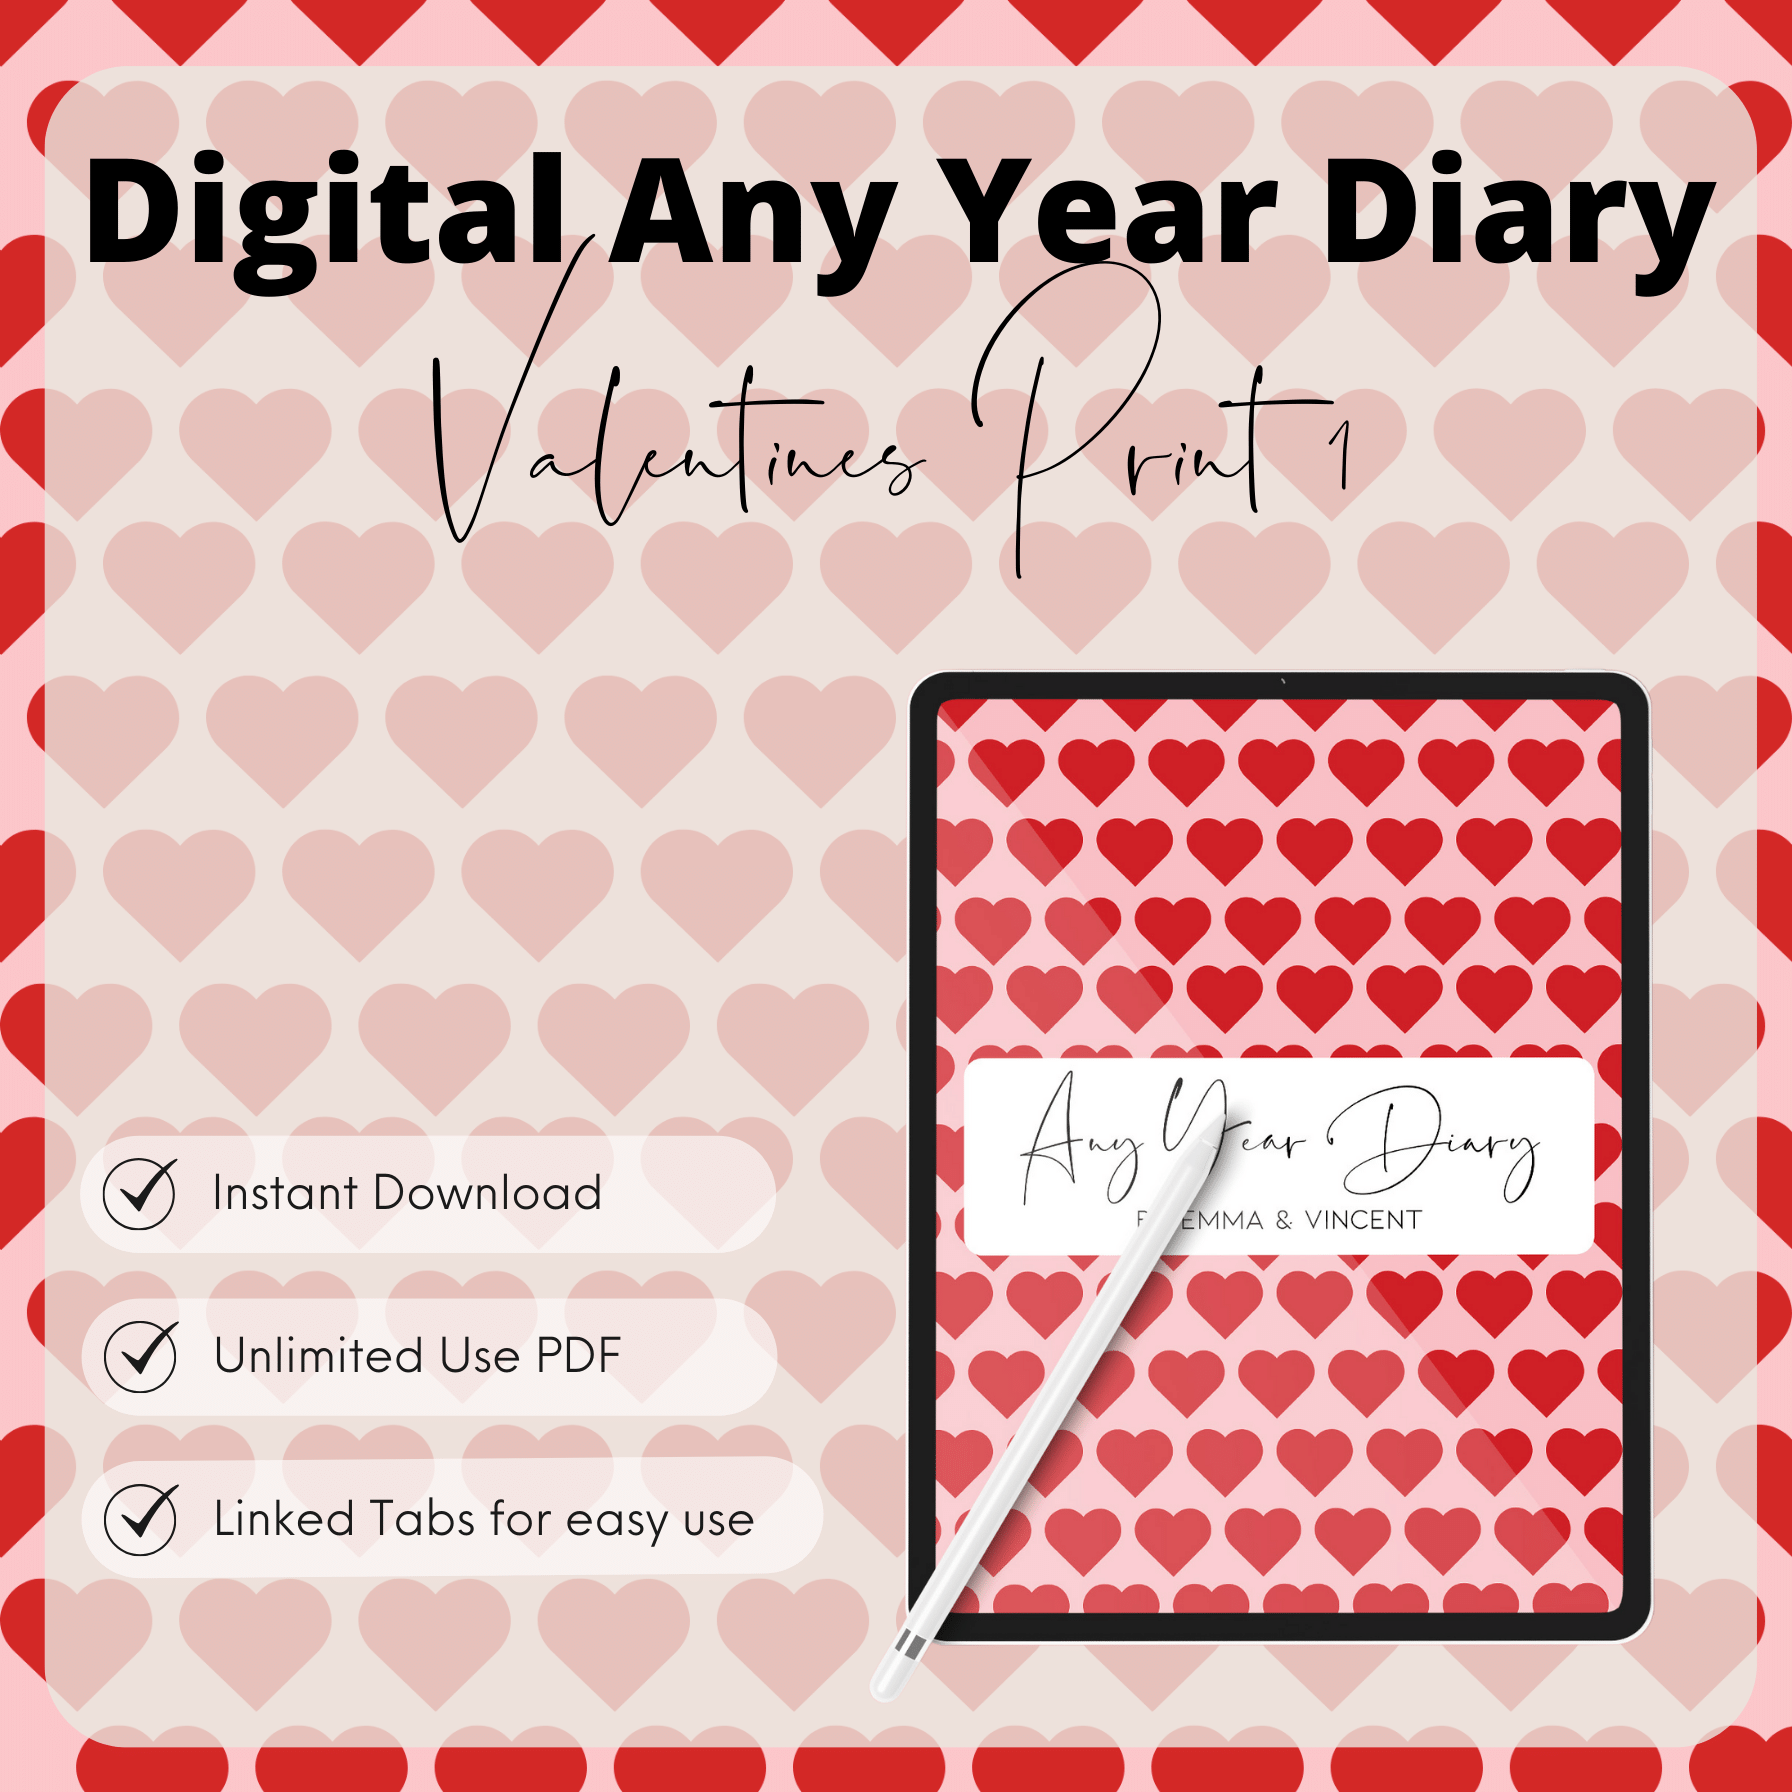 DIGITAL ANY YEAR DIARY (Valentine's Print 1)